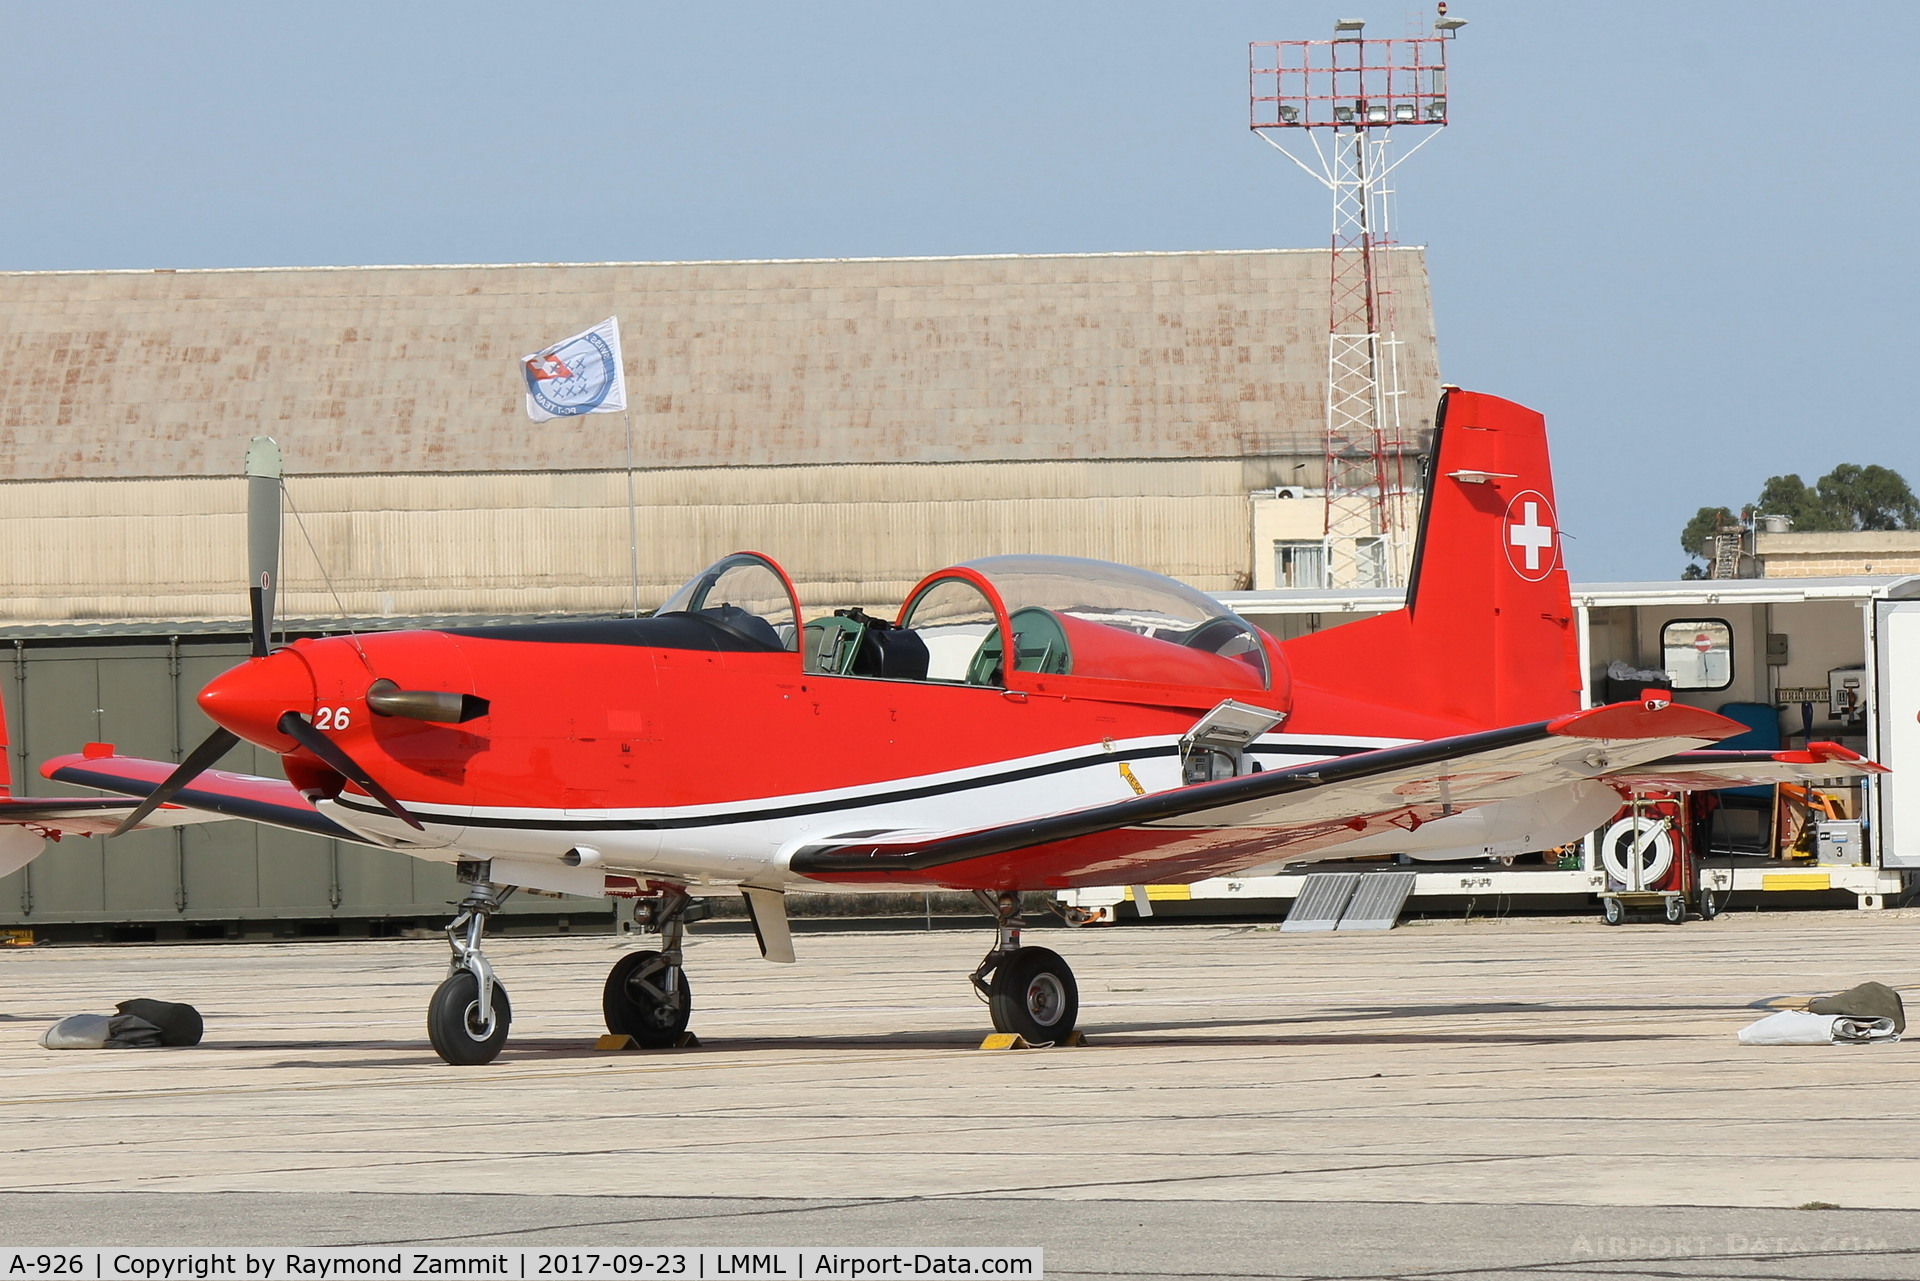 A-926, 1983 Pilatus PC-7 Turbo Trainer C/N 334, Pilatus PC-7 A-926 Swiss Air Force